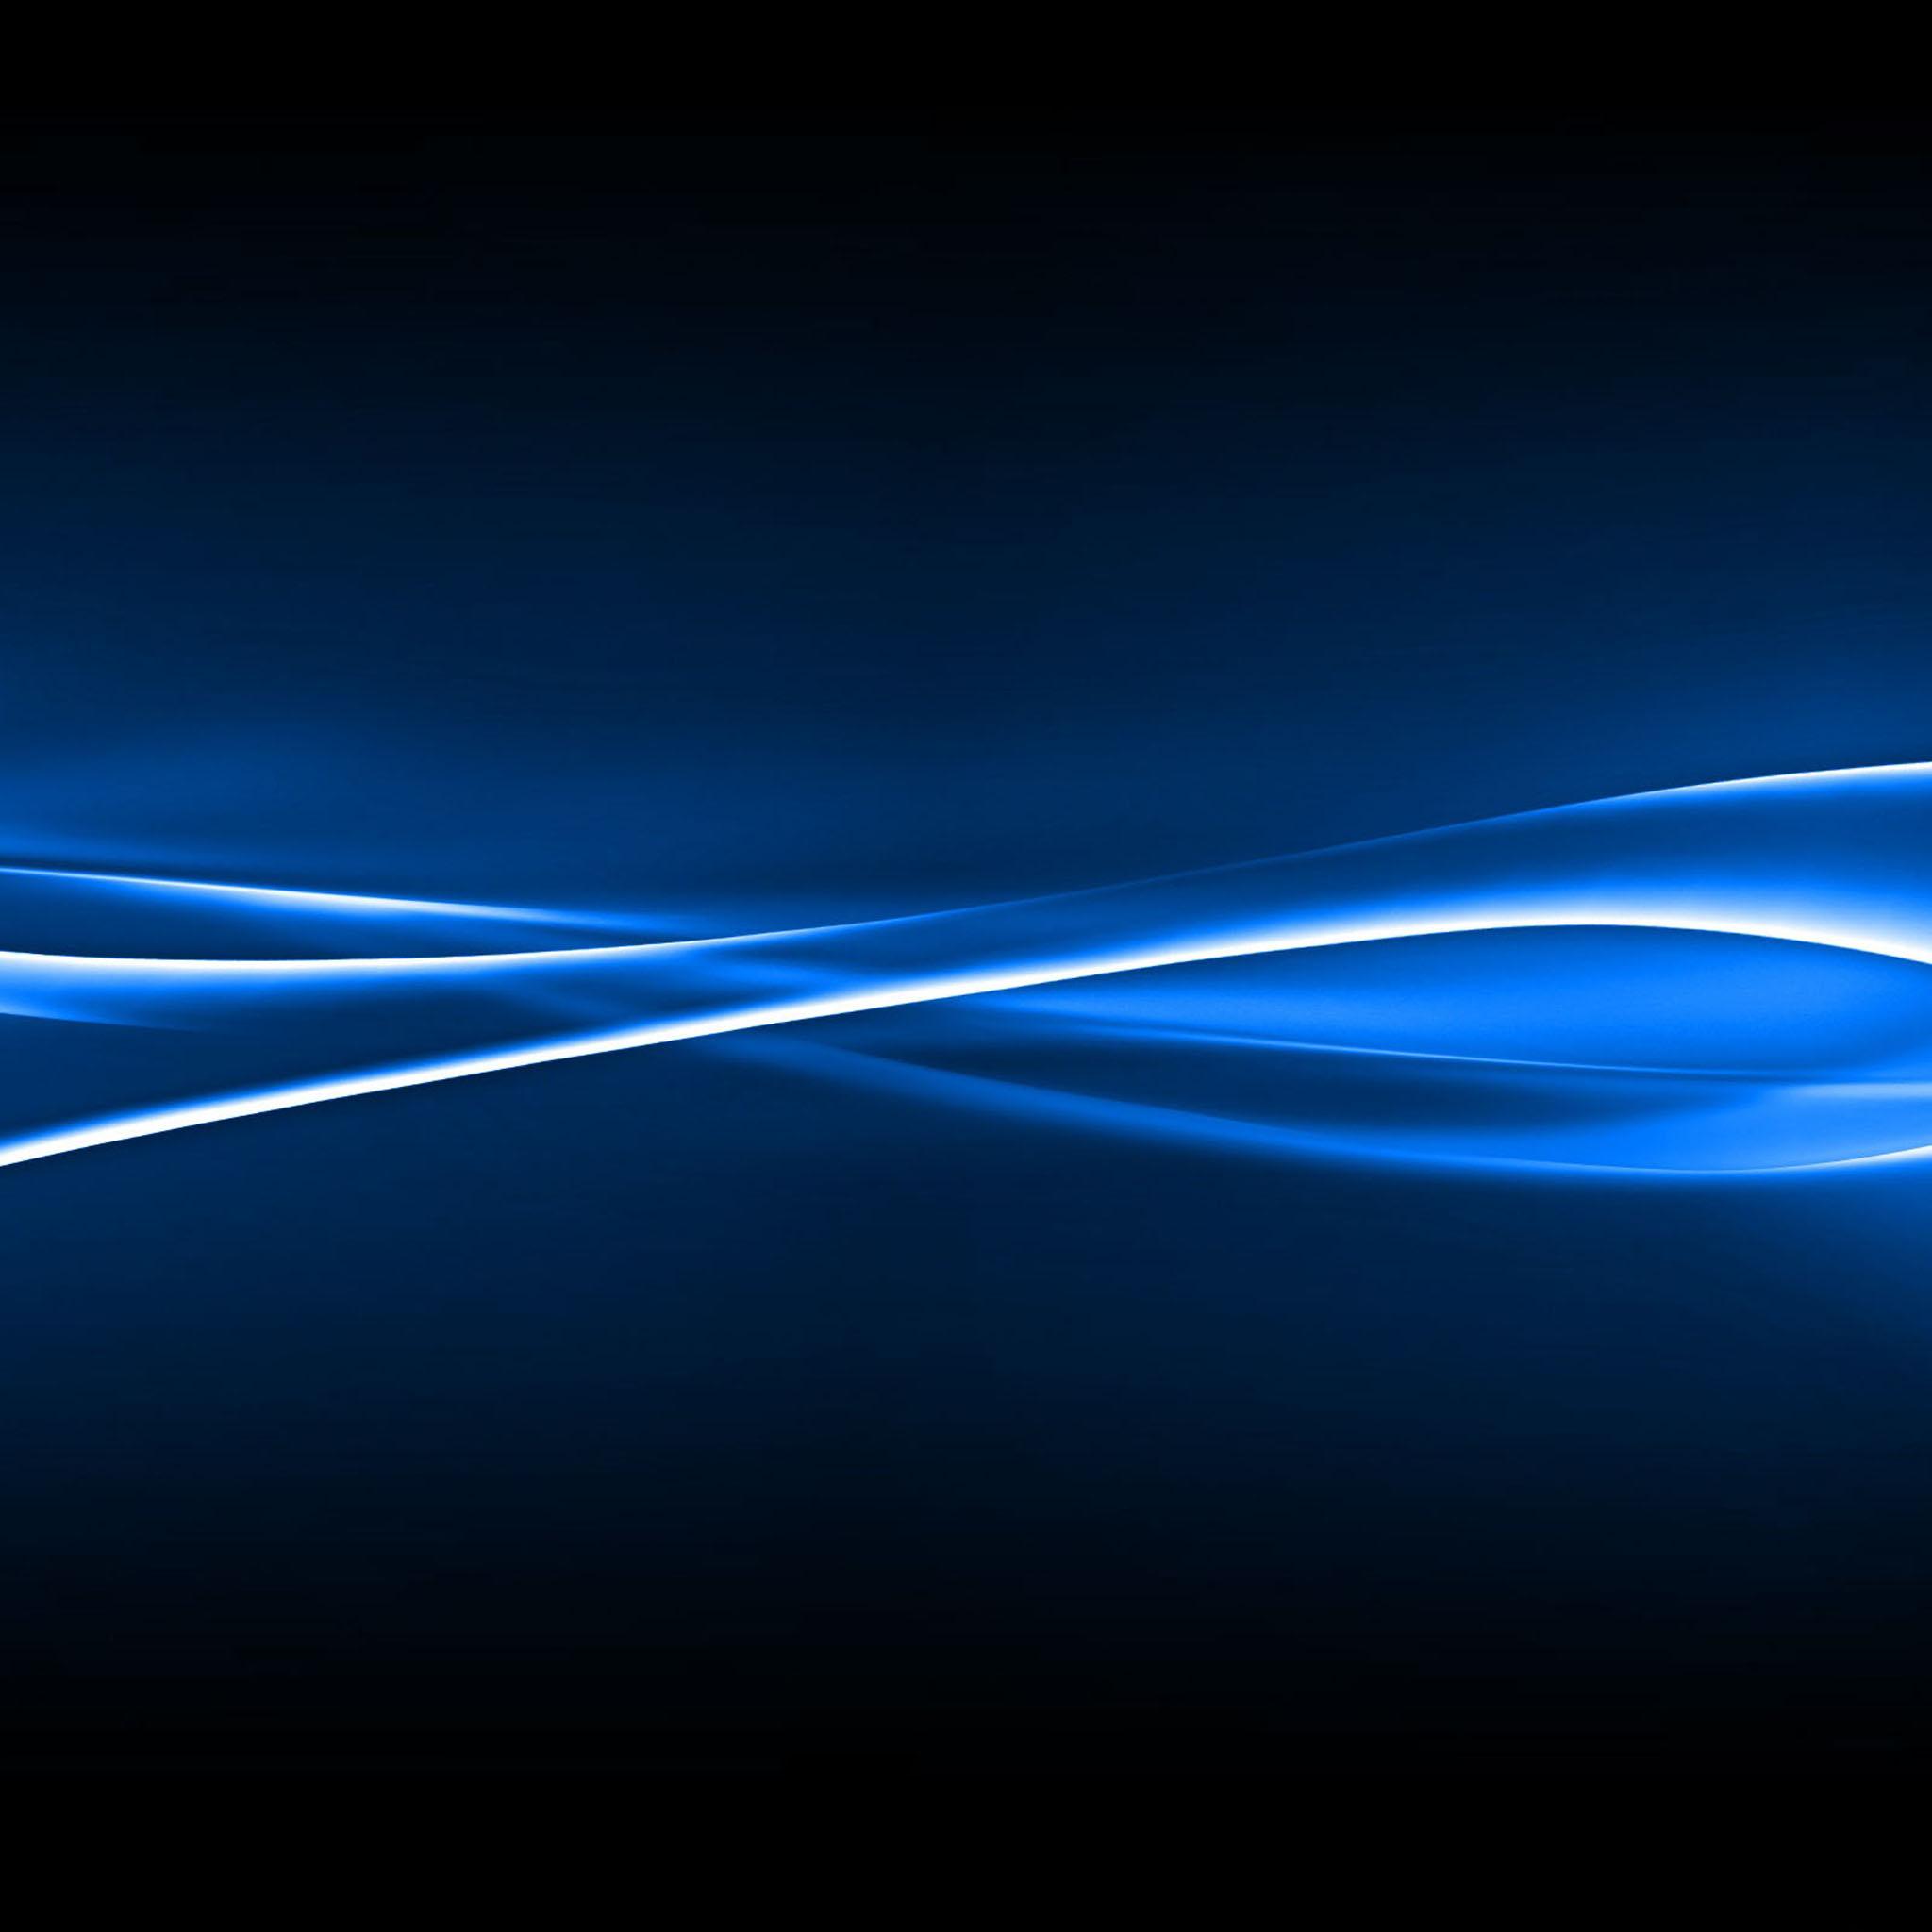 Blue Light Wave Ipad Wallpaper Desktop Ipad タブレット壁紙ギャラリー